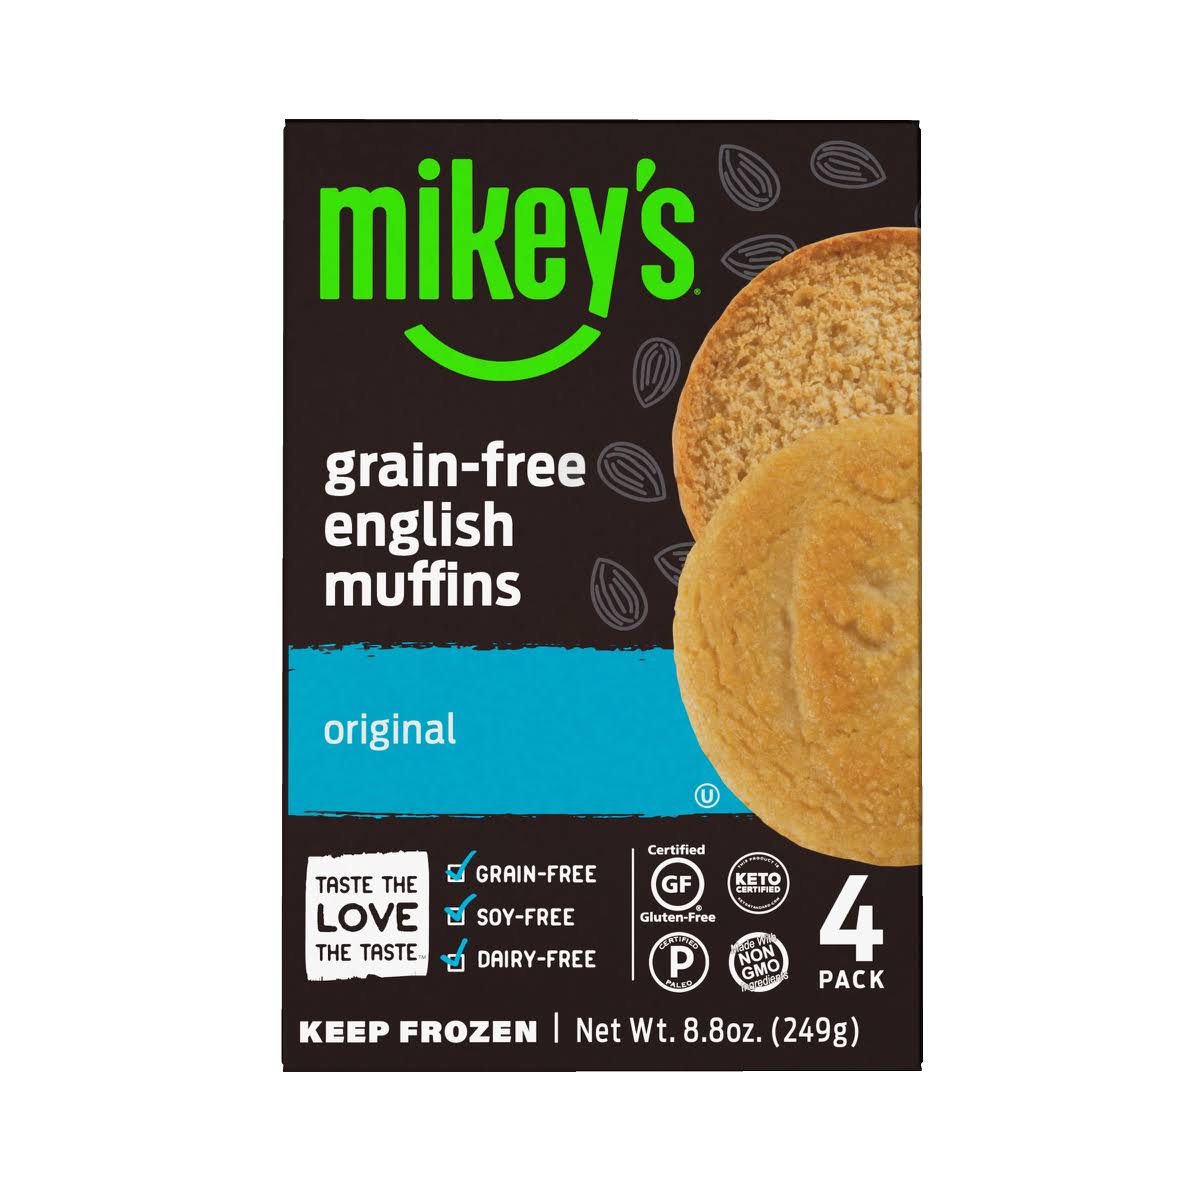 Mikey's Muffins Gluten Free English Muffins - Original, 8.8oz